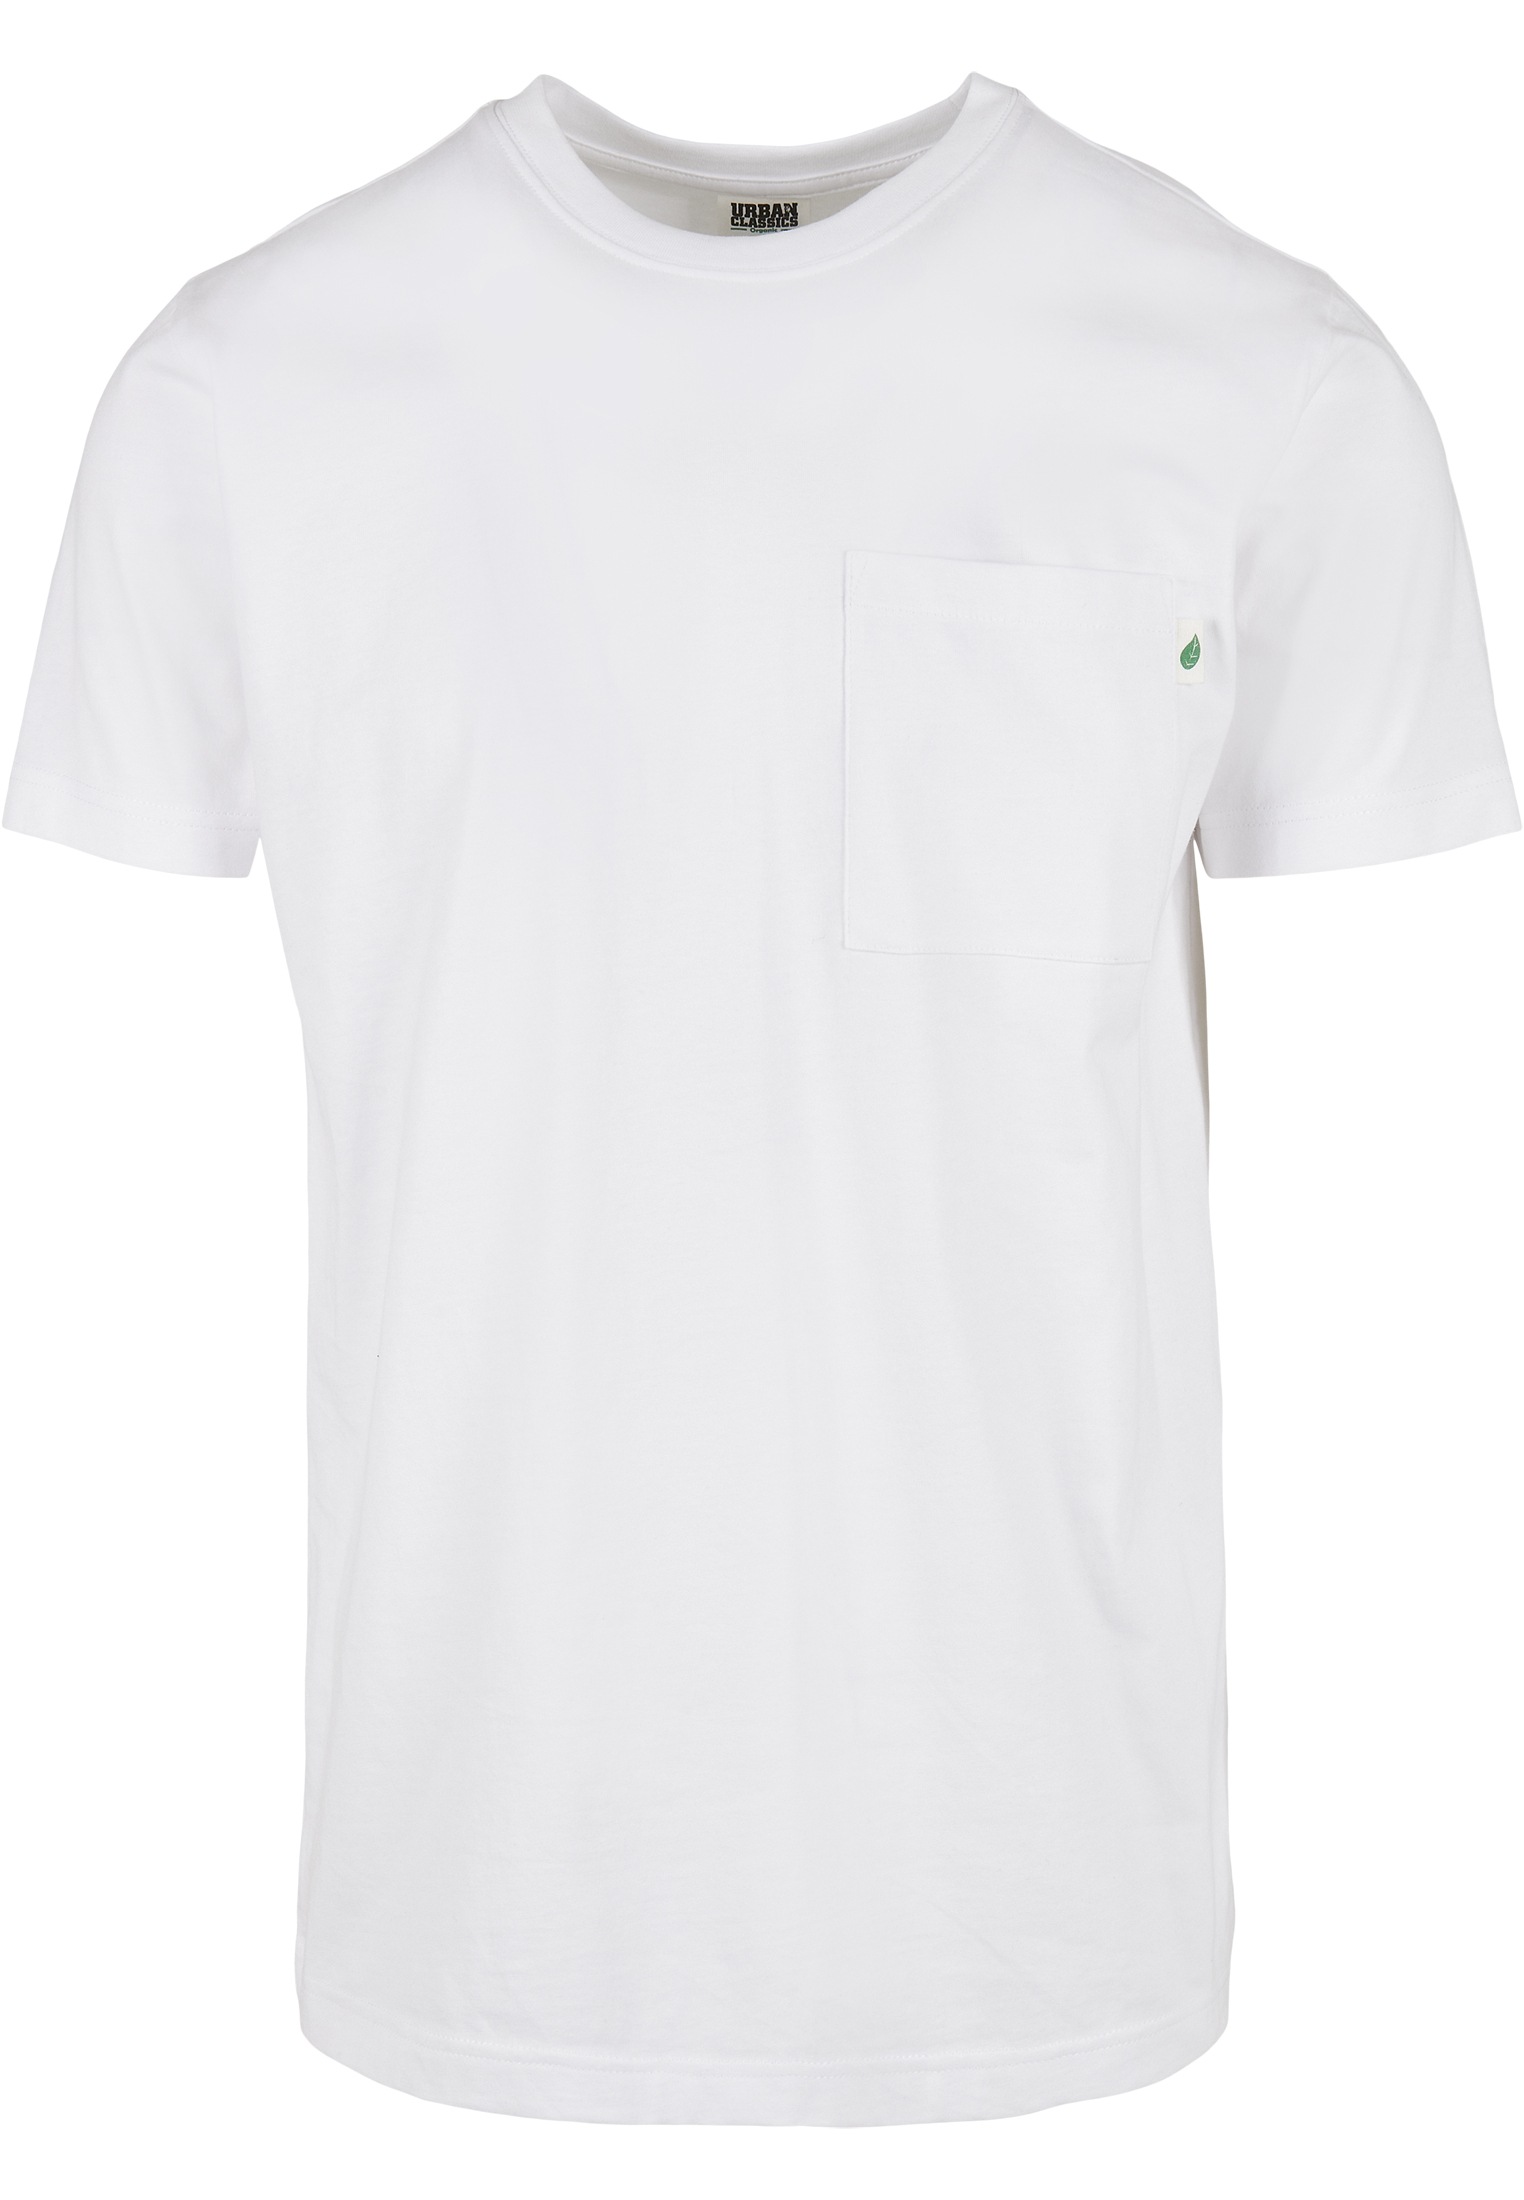 CLASSICS URBAN (1 bestellen ▷ BAUR | »Herren Organic Tee«, T-Shirt Basic Pocket tlg.) Cotton